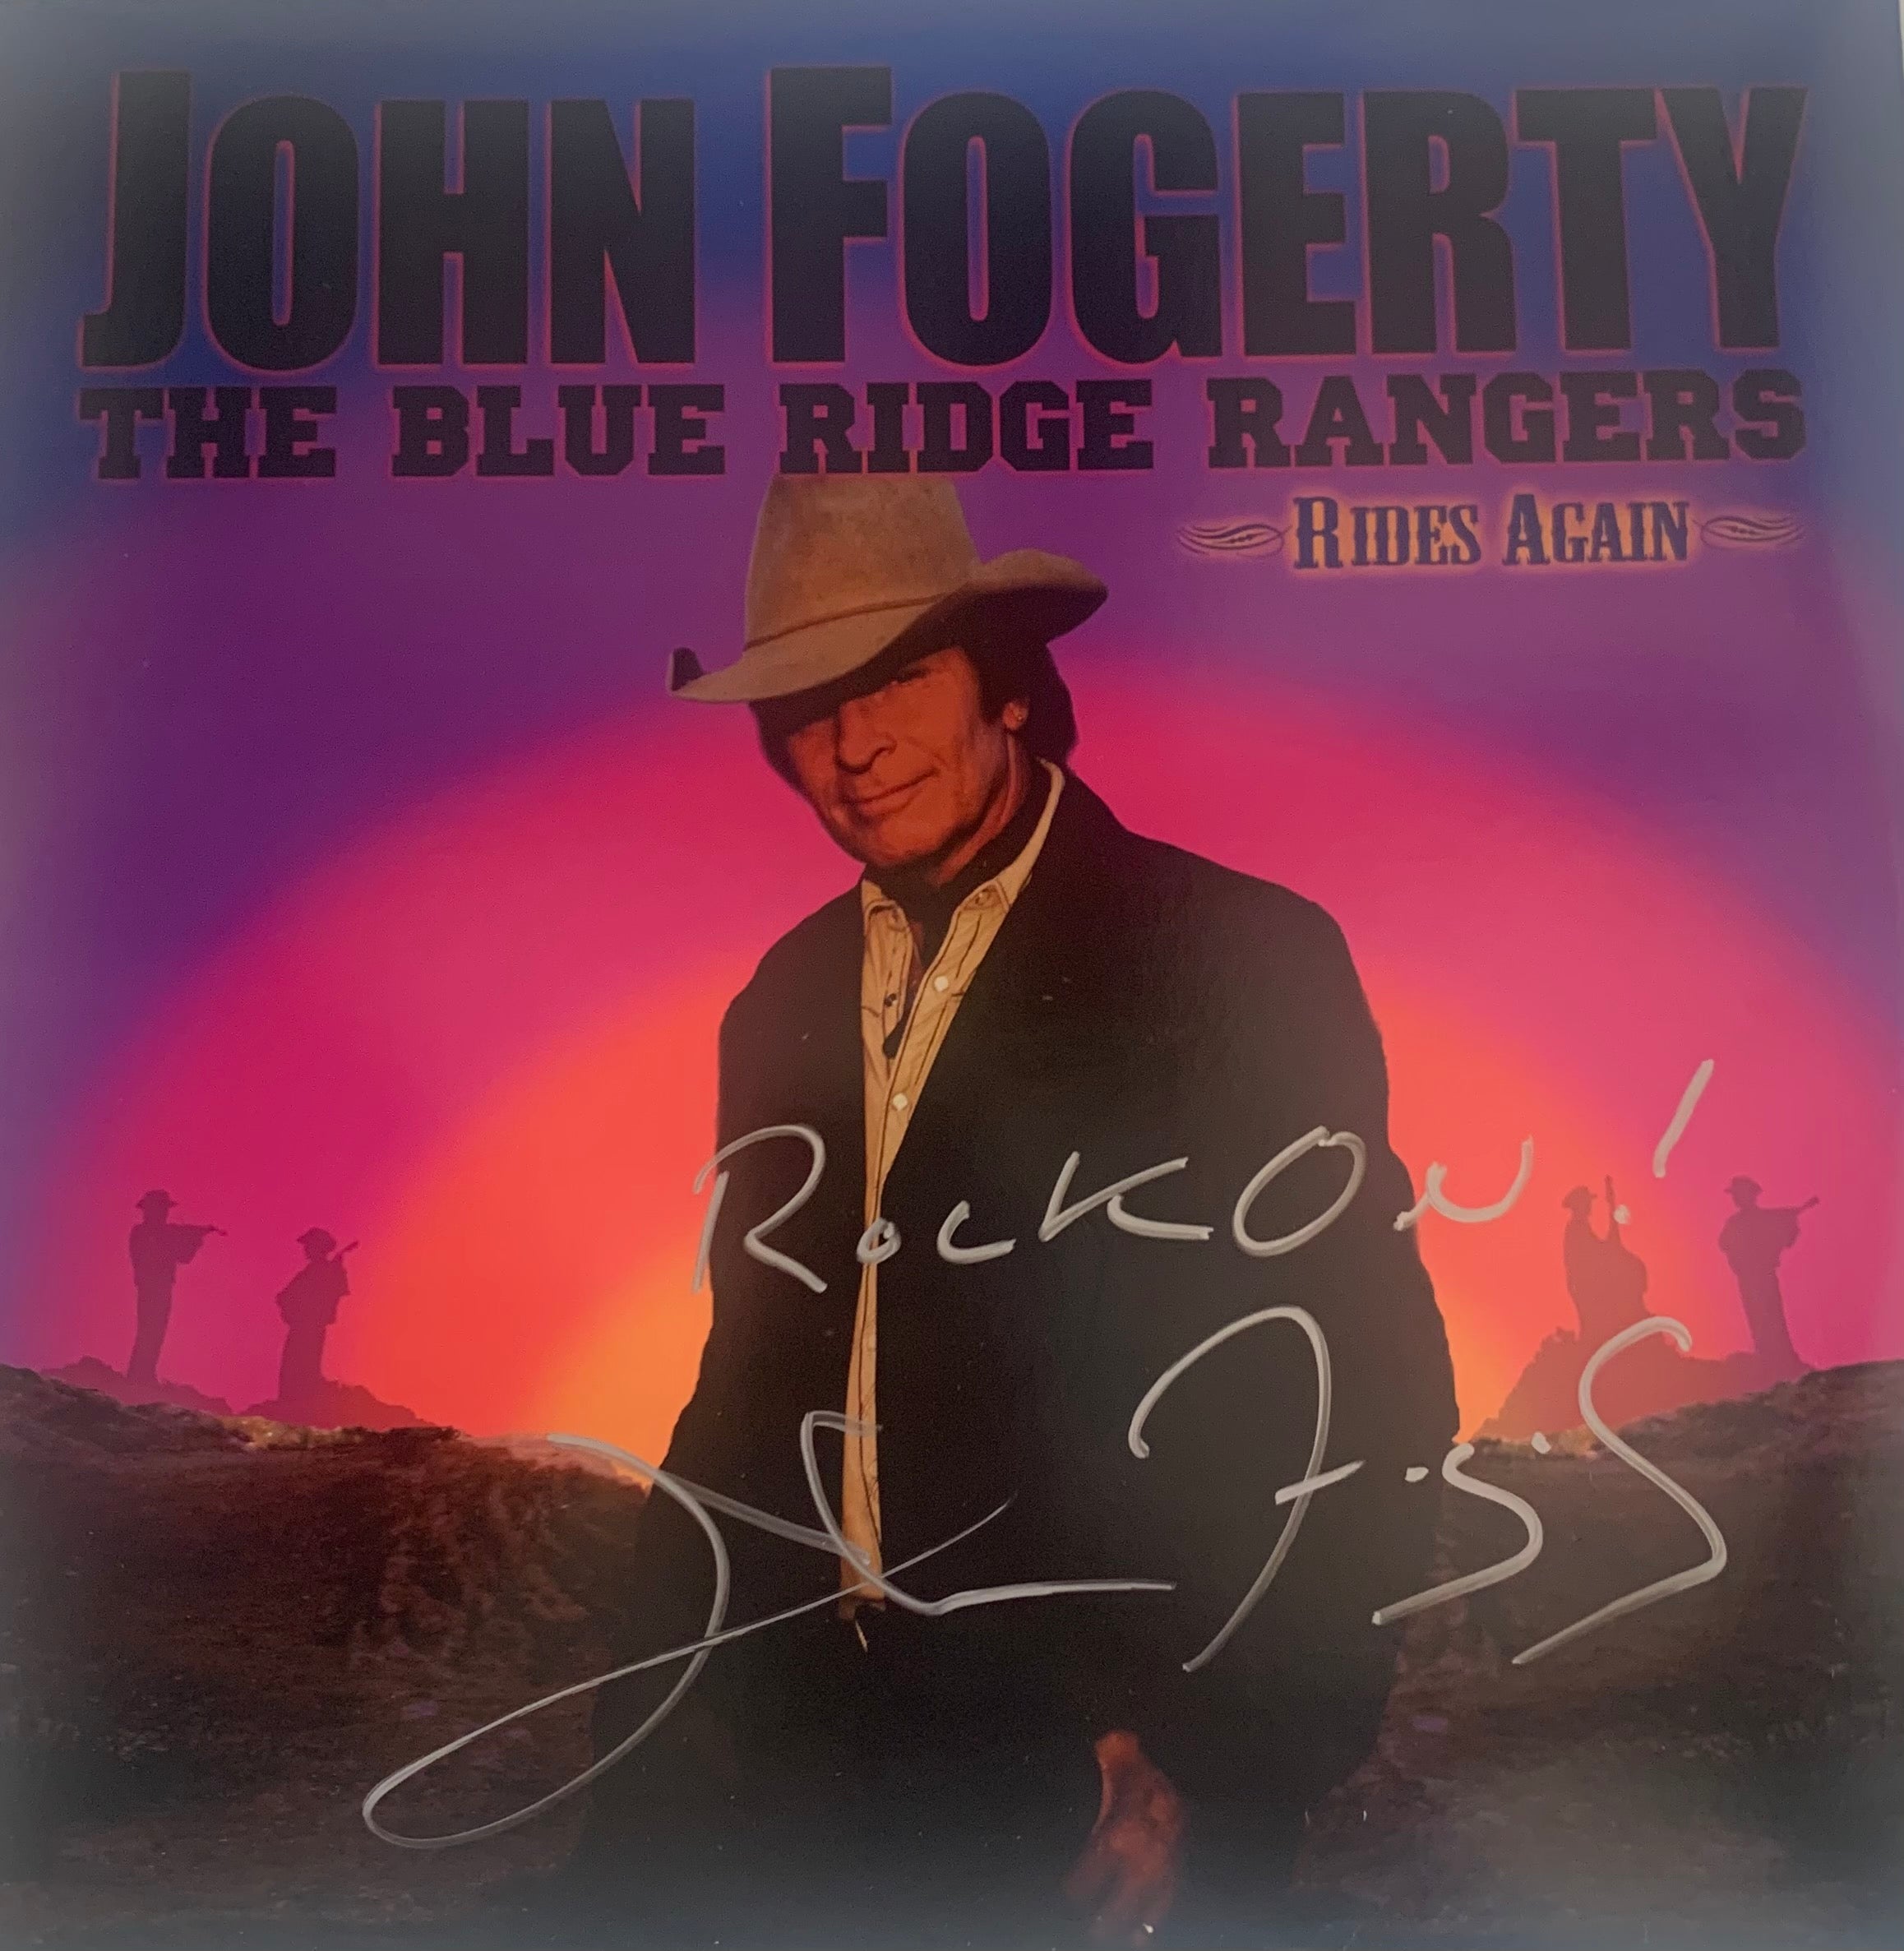 The Blue Ridge Rangers Rides Again Vinyl (Signed by John Fogerty)